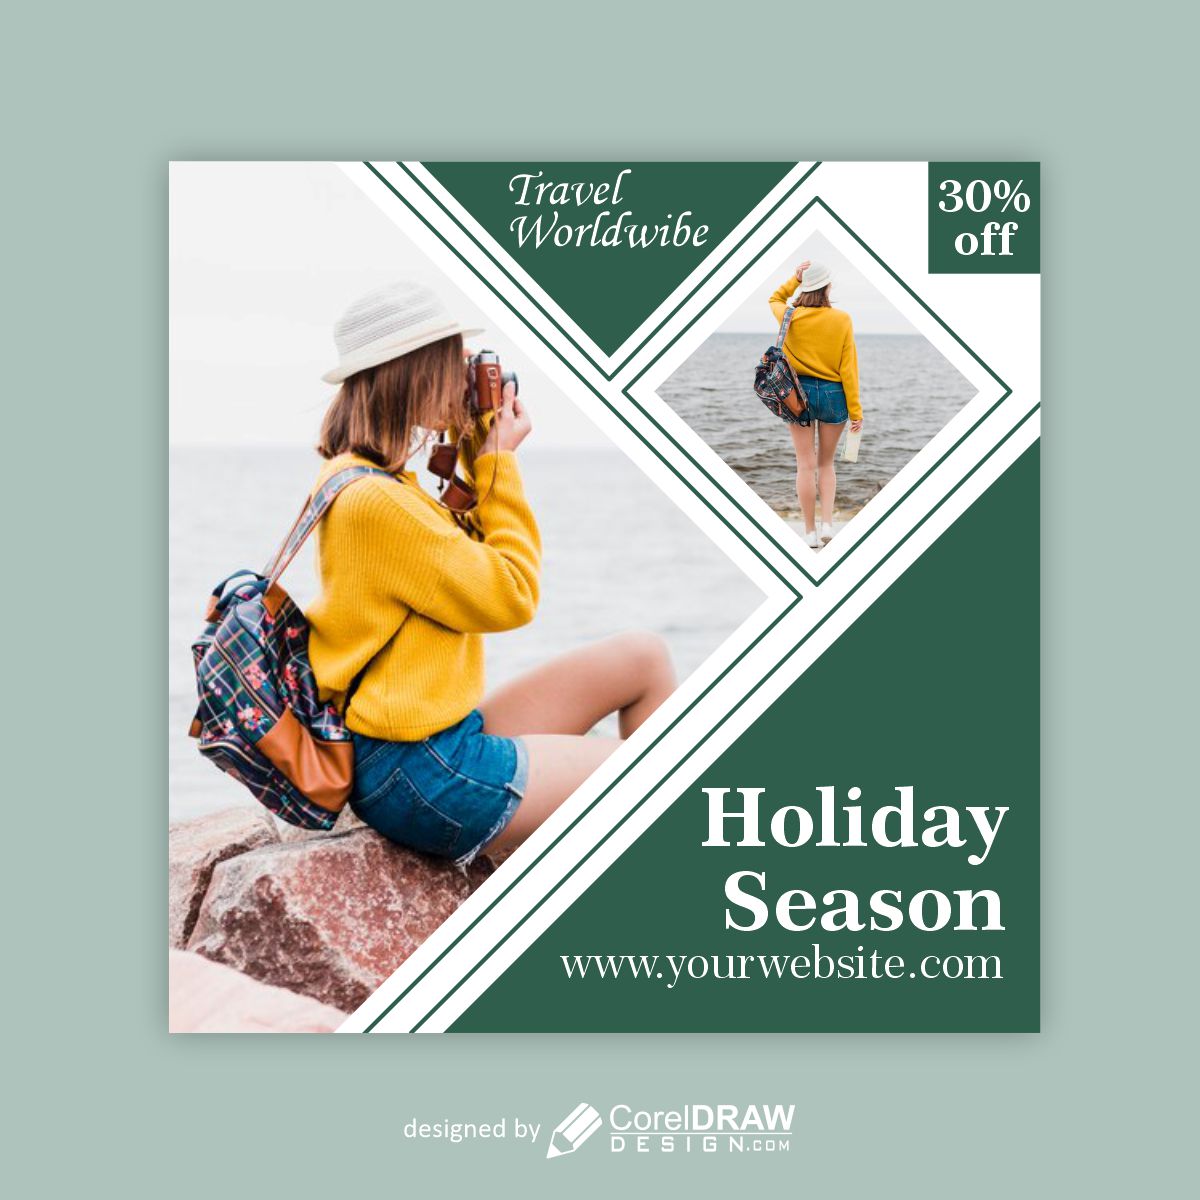 Travel Worldwibe Holiday Season poster design vector free design